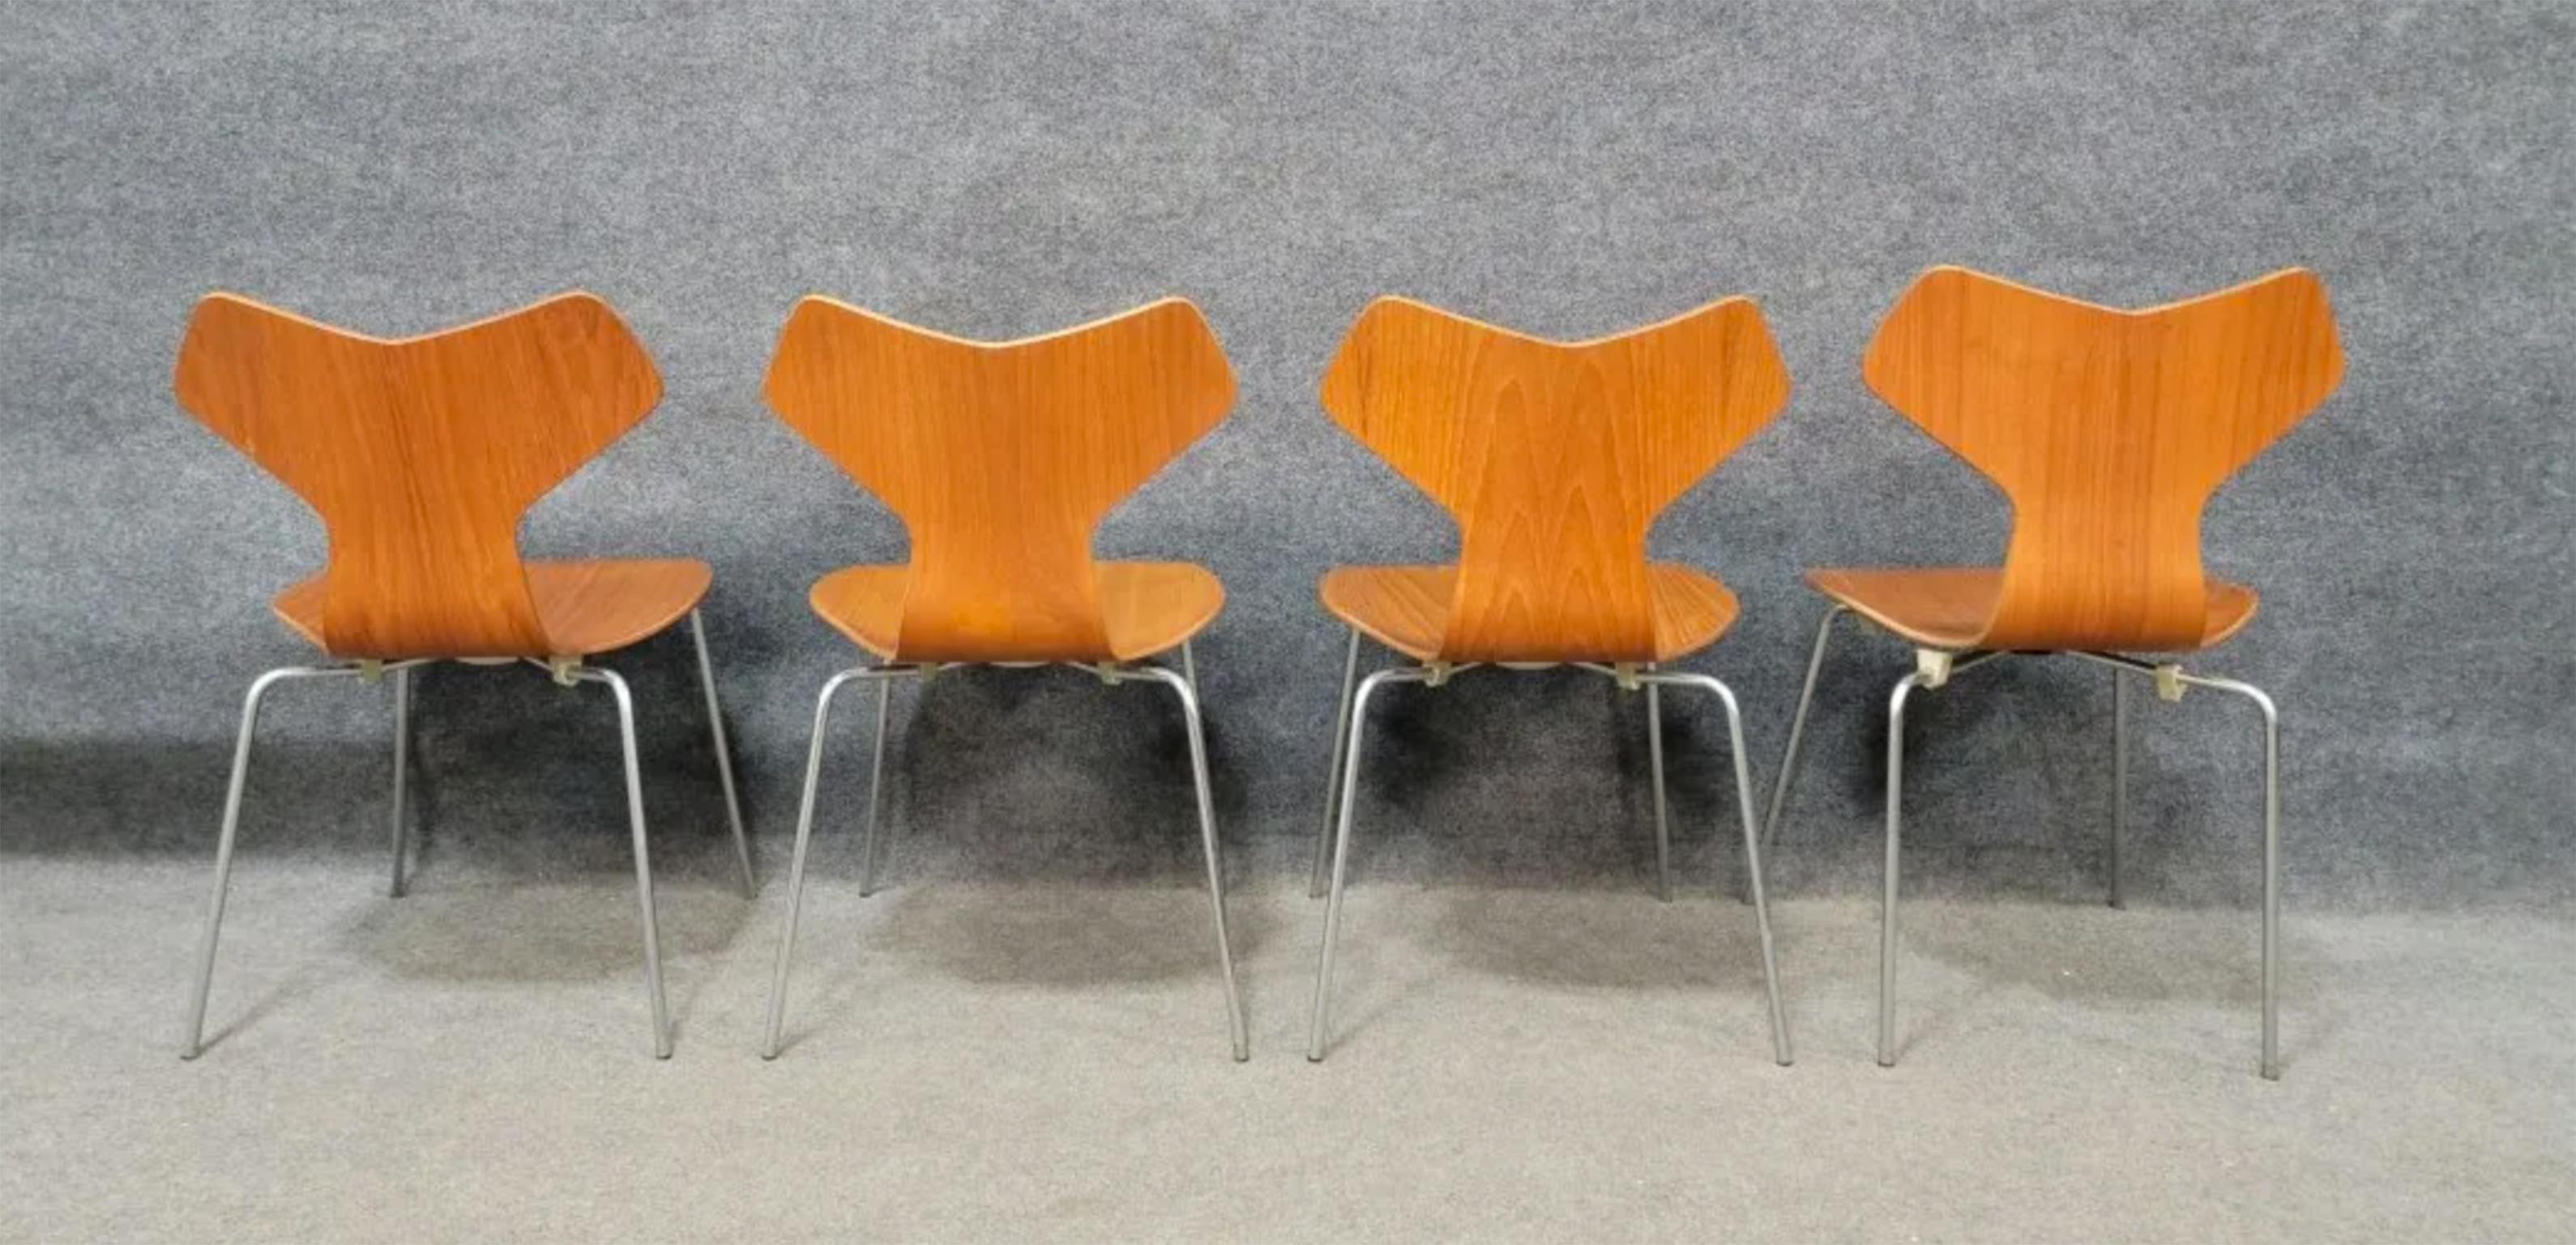 Woodwork 4 Grand Prix 3130 Danish Modern Chair by Arne Jacobsen for Fritz Hansen